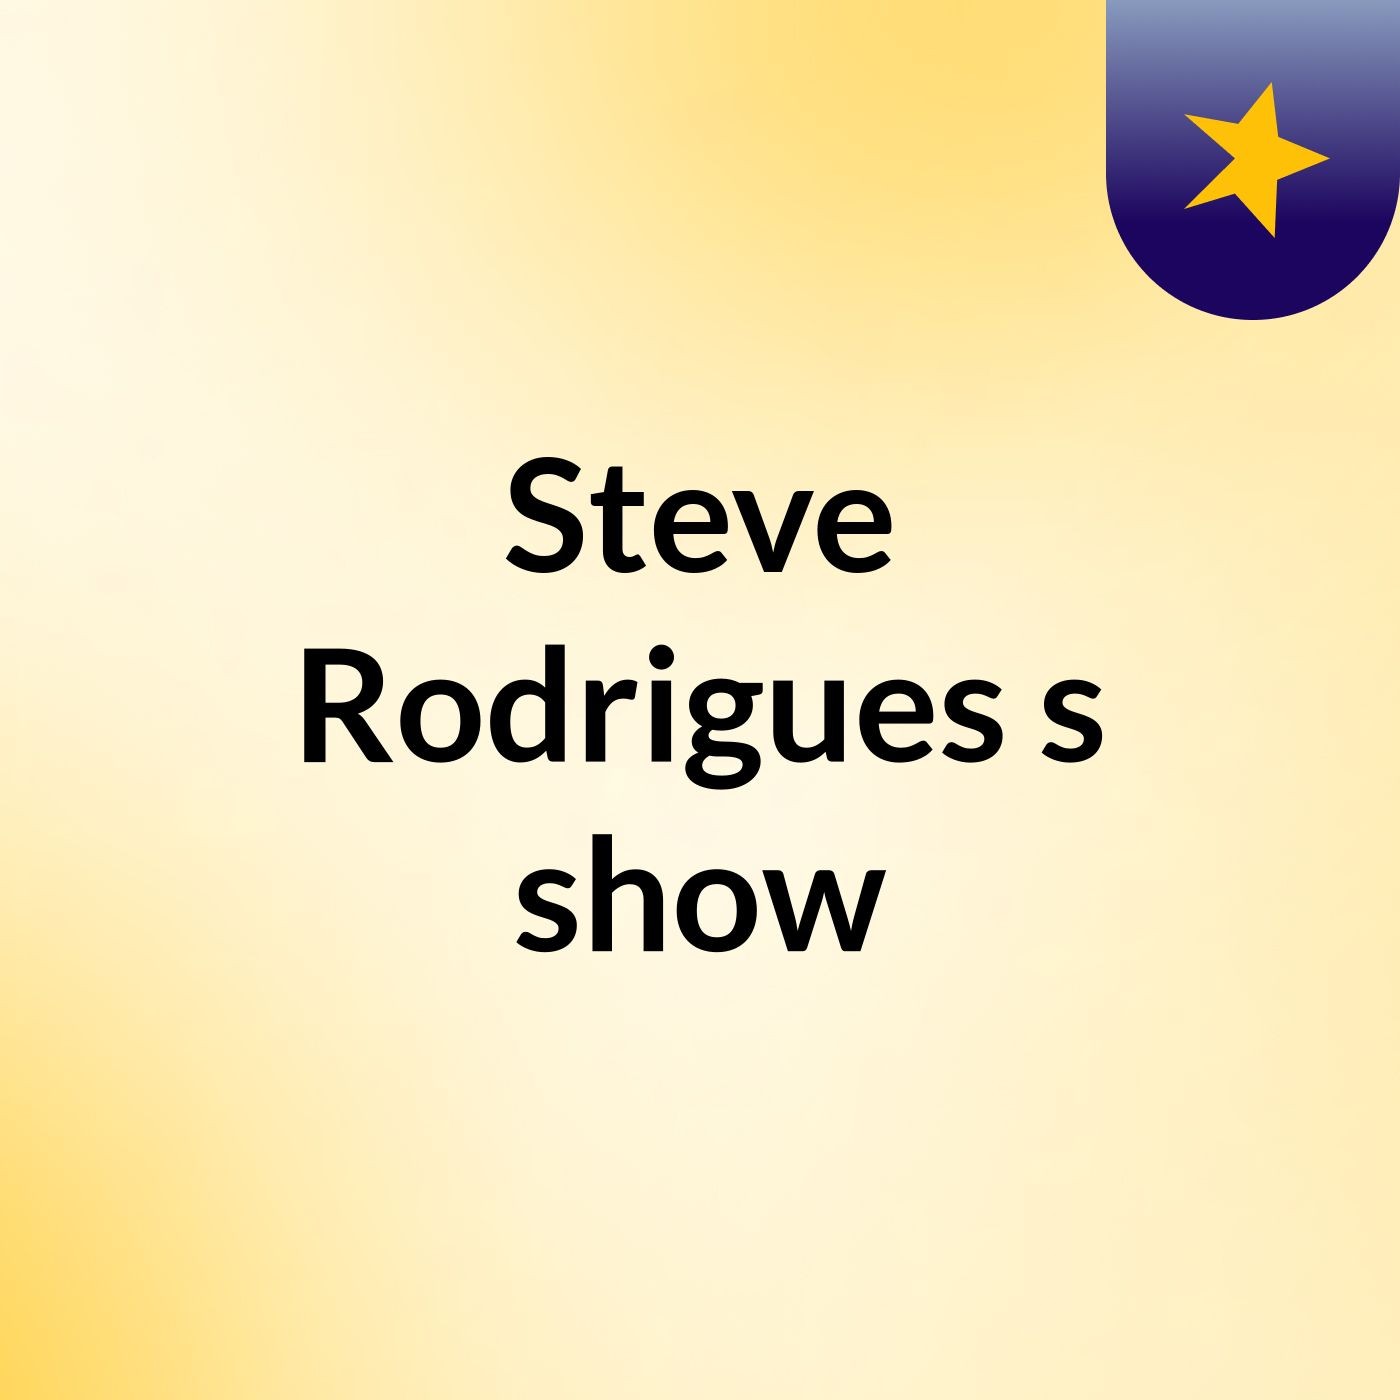 Episode 2 - Steve Rodrigues's show